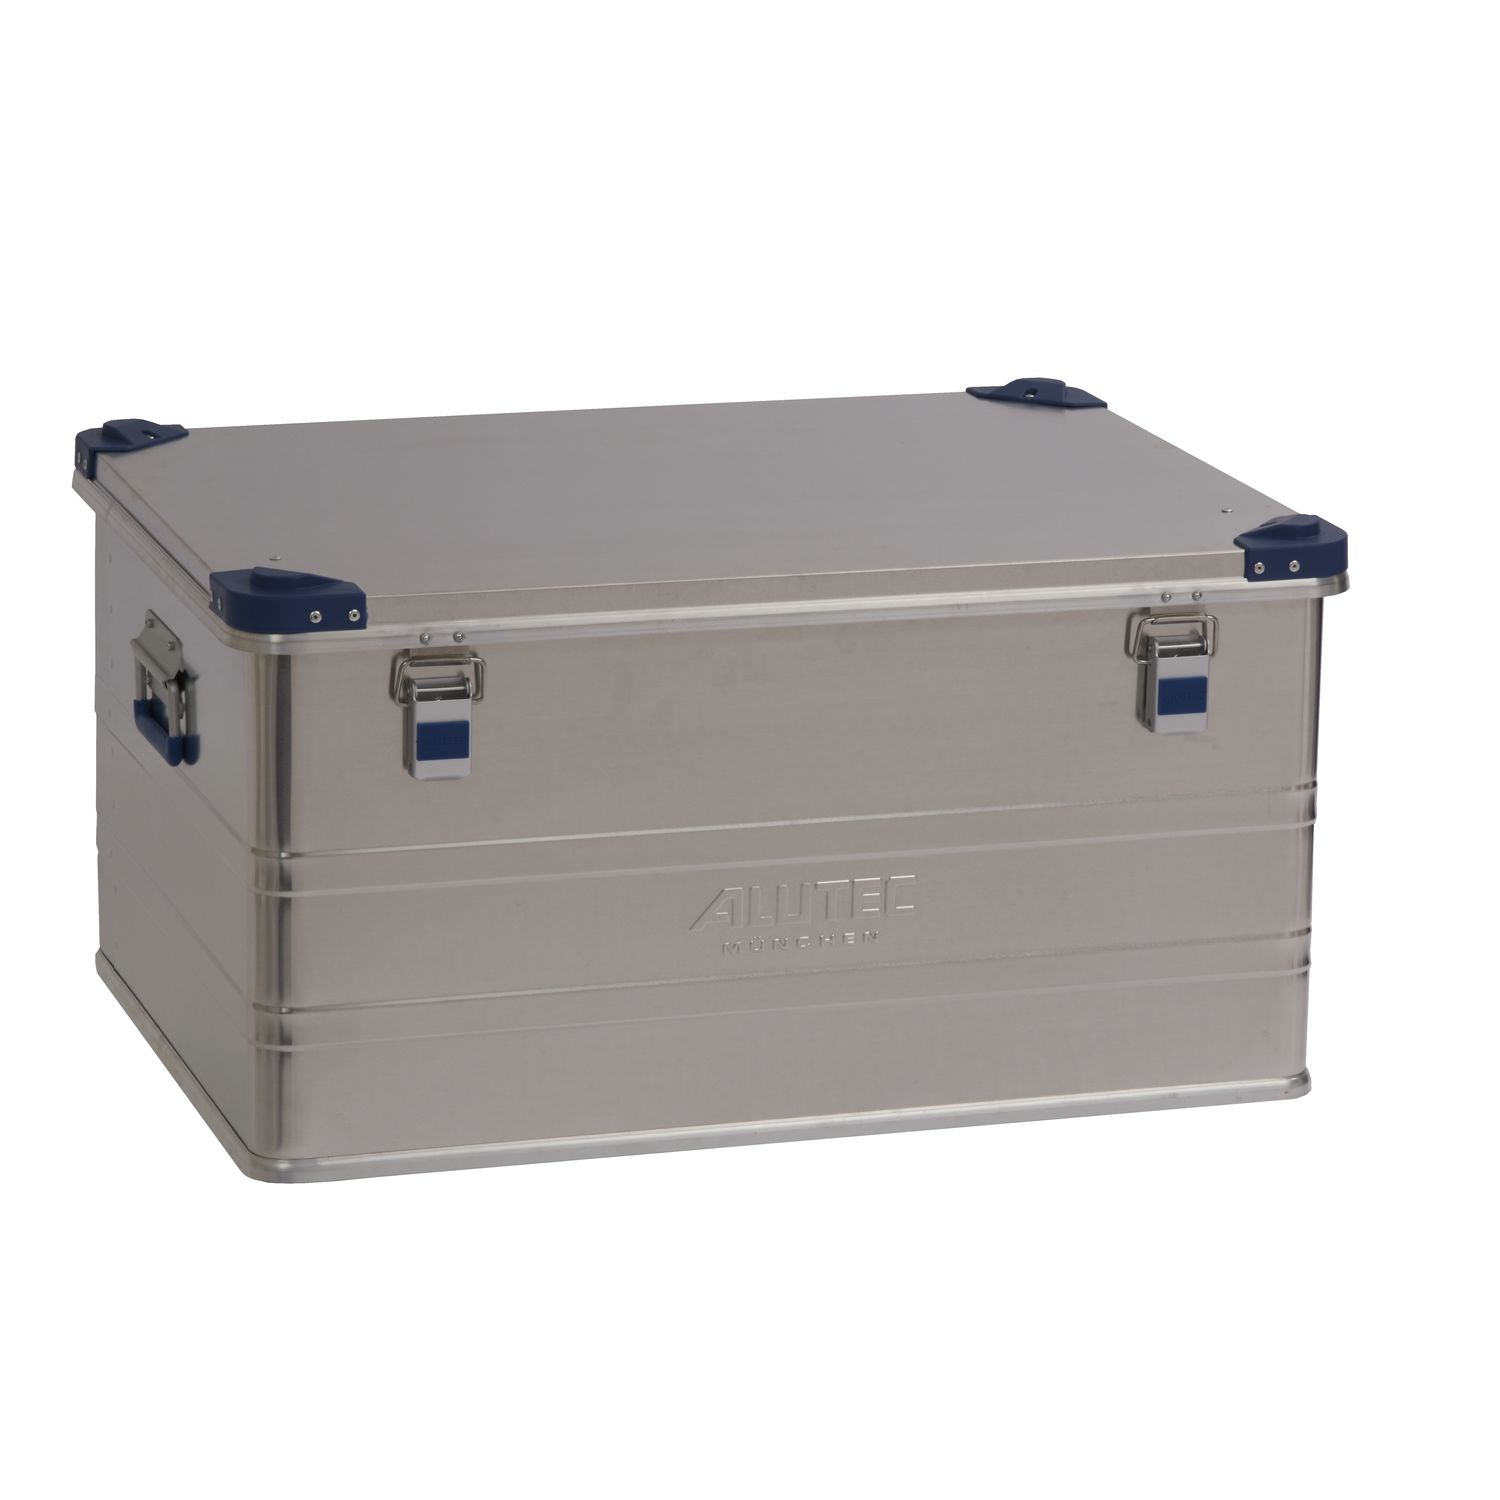 Alutec Aluminiumbox Industry aus 1 mm starkem Alublech 592 x 385 x